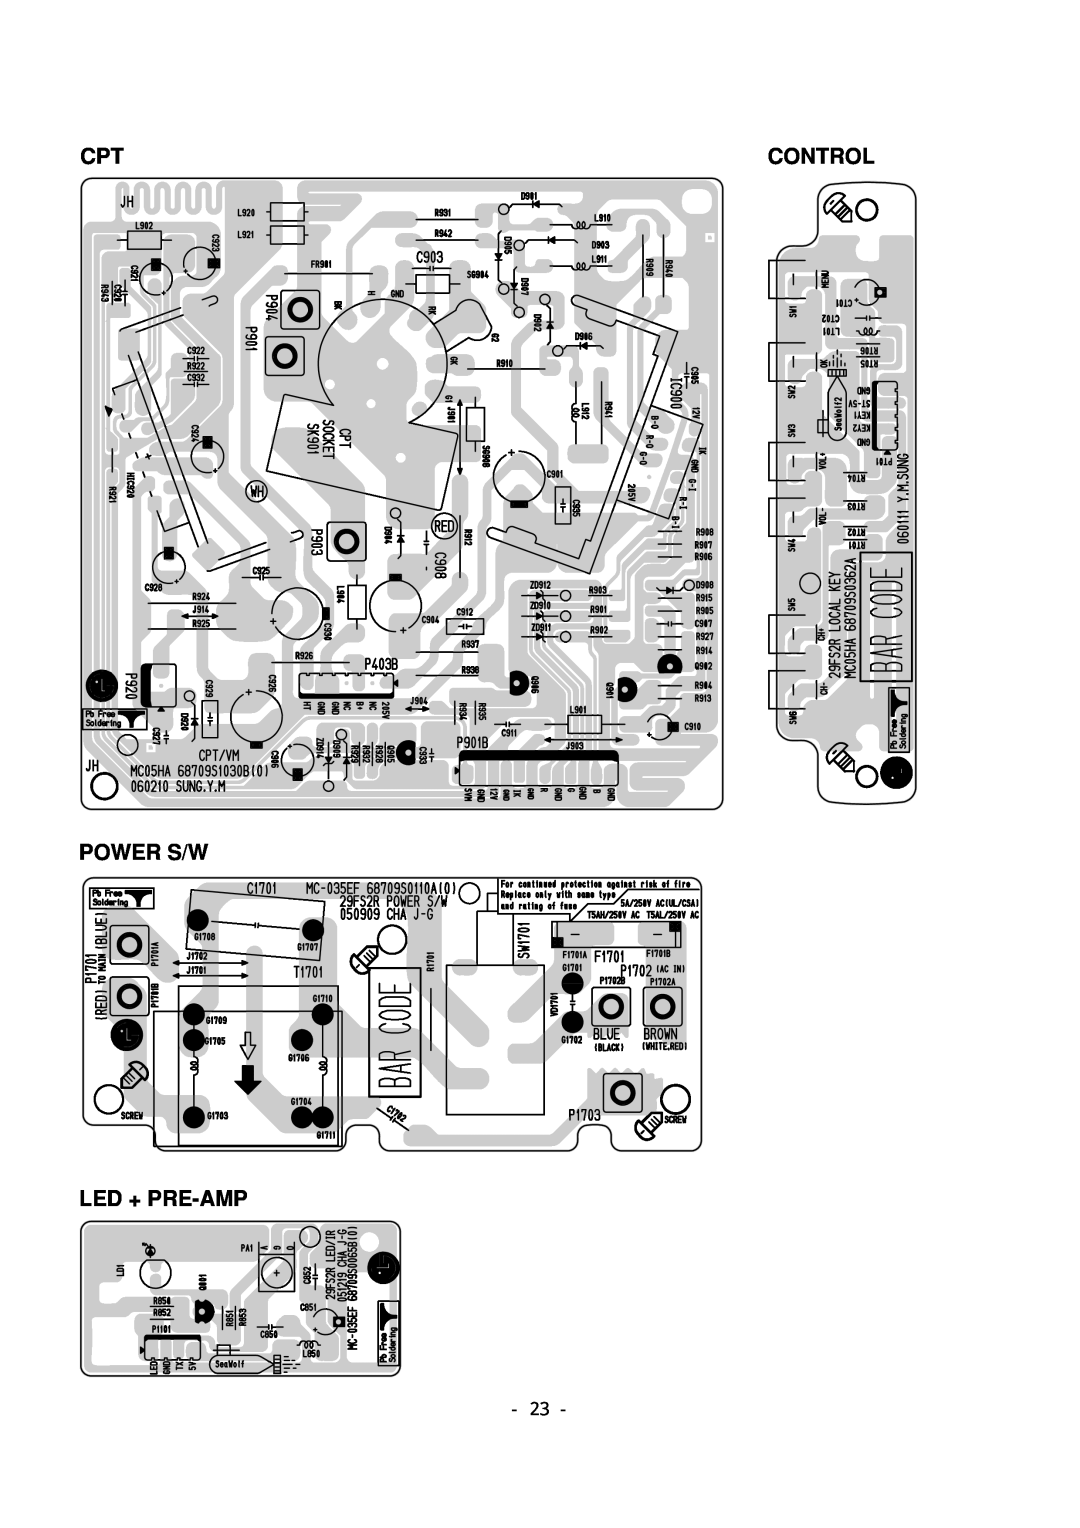 LG Electronics 29FS2AMB/ANX-ZE service manual Control, Power S/W Led + Pre-Amp 